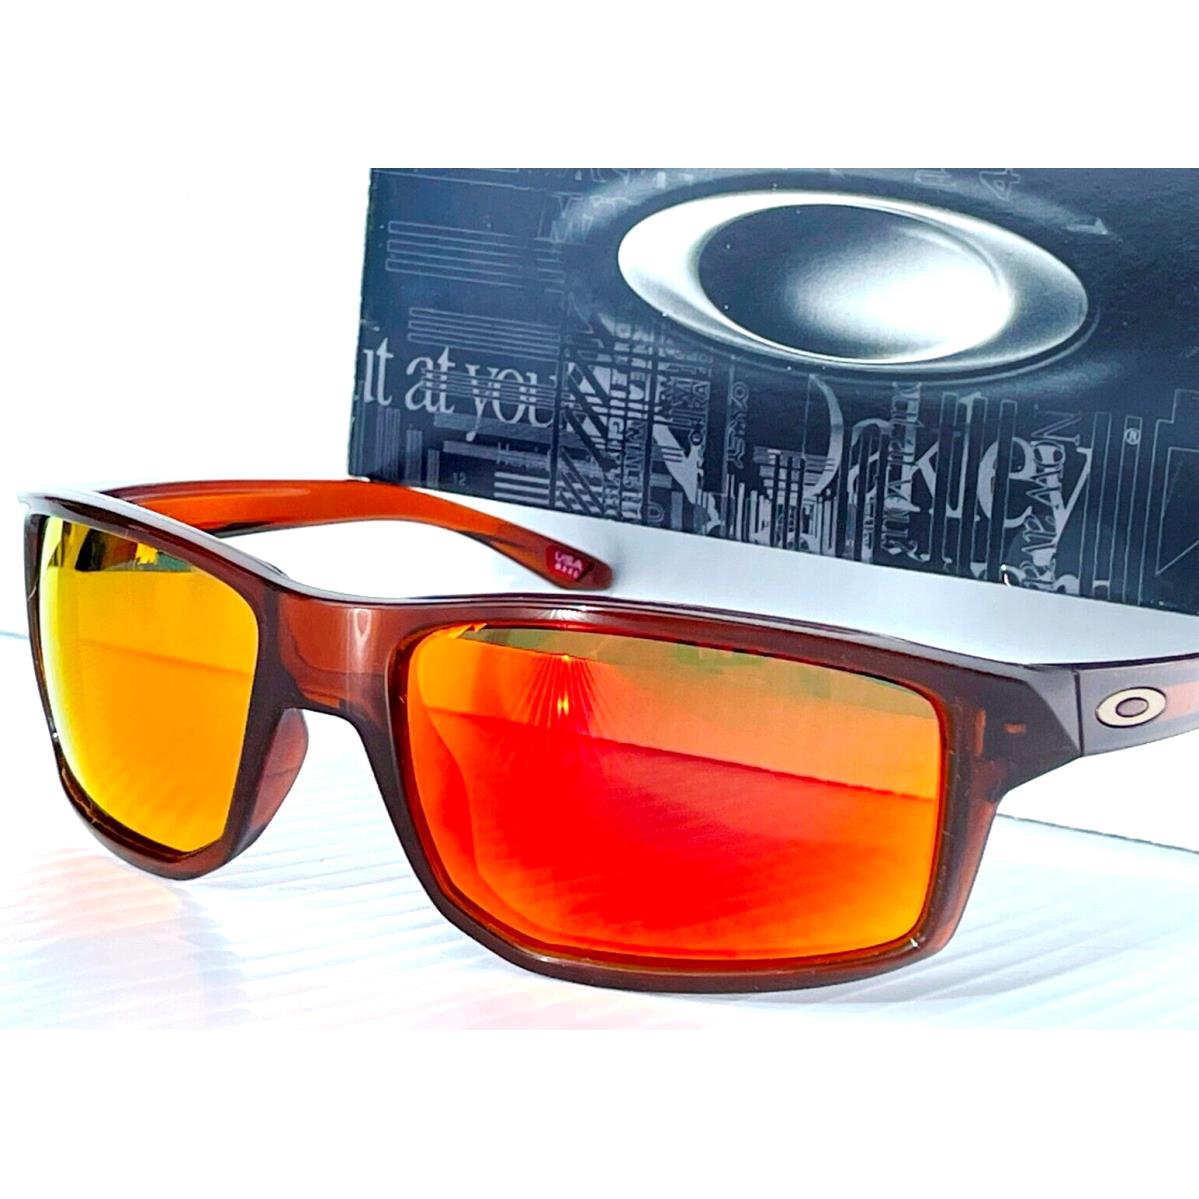 Oakley sunglasses Gibston - Brown Frame, Red Lens 5